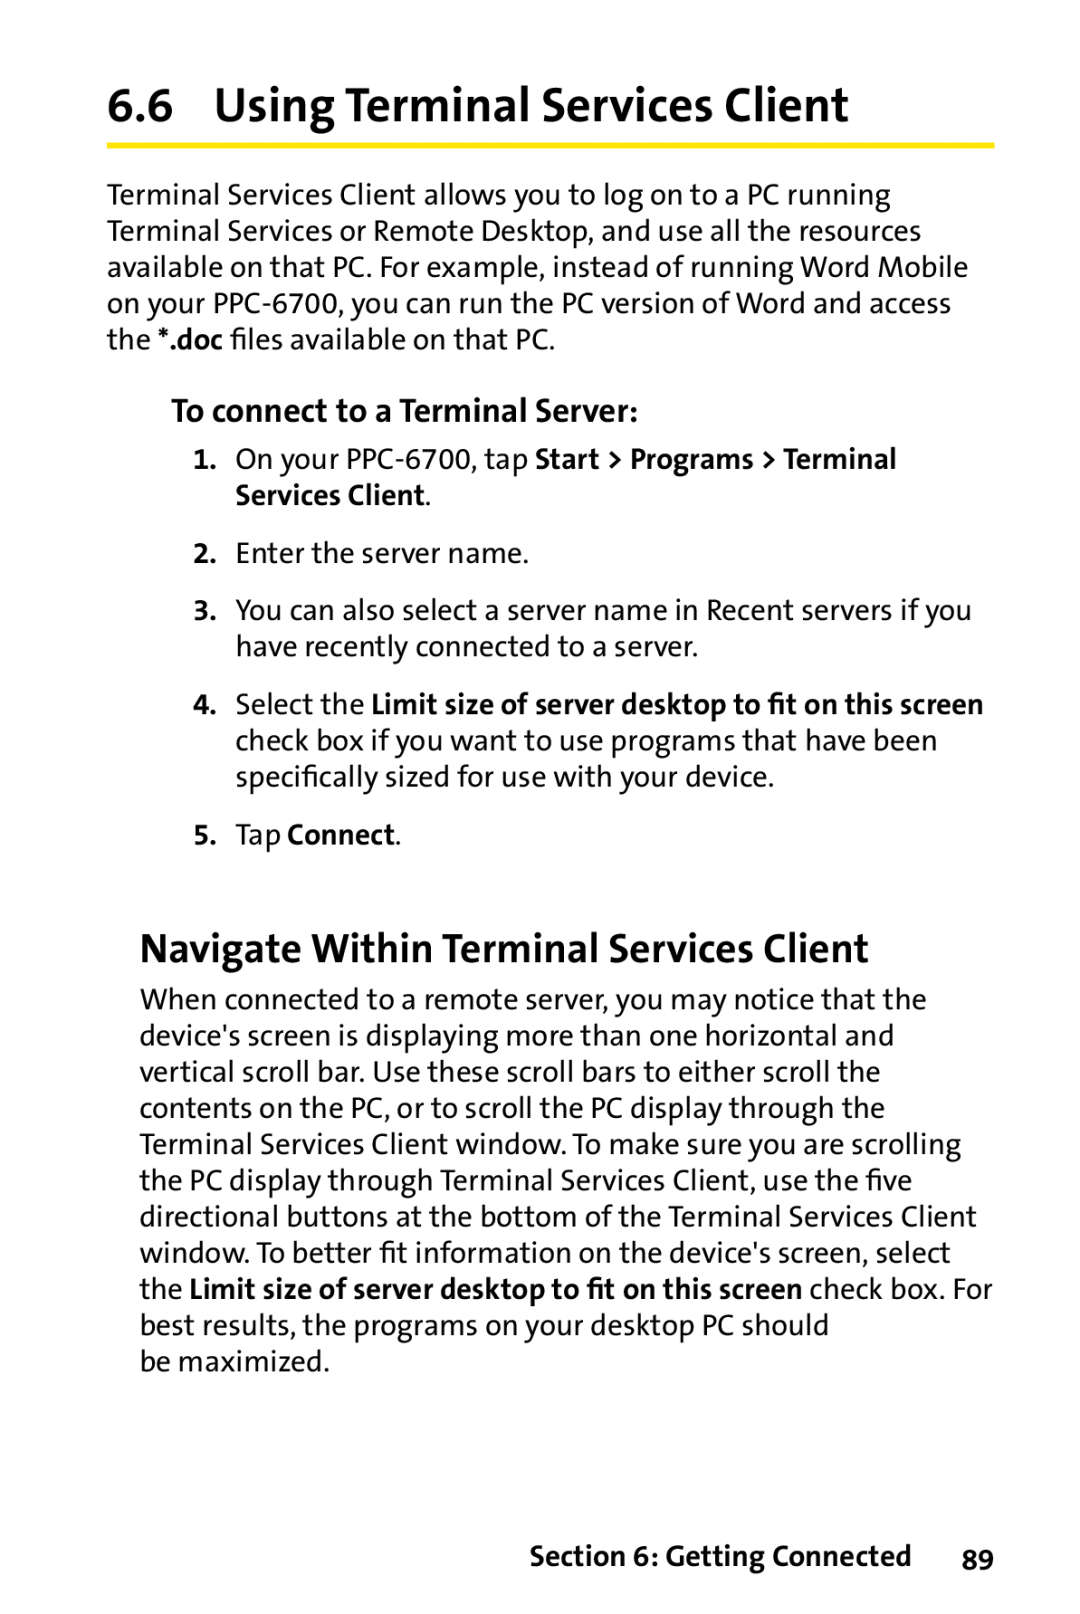 Sprint Nextel PPC-6700 manual Using Terminal Services Client, Navigate Within Terminal Services Client, Tap Connect 